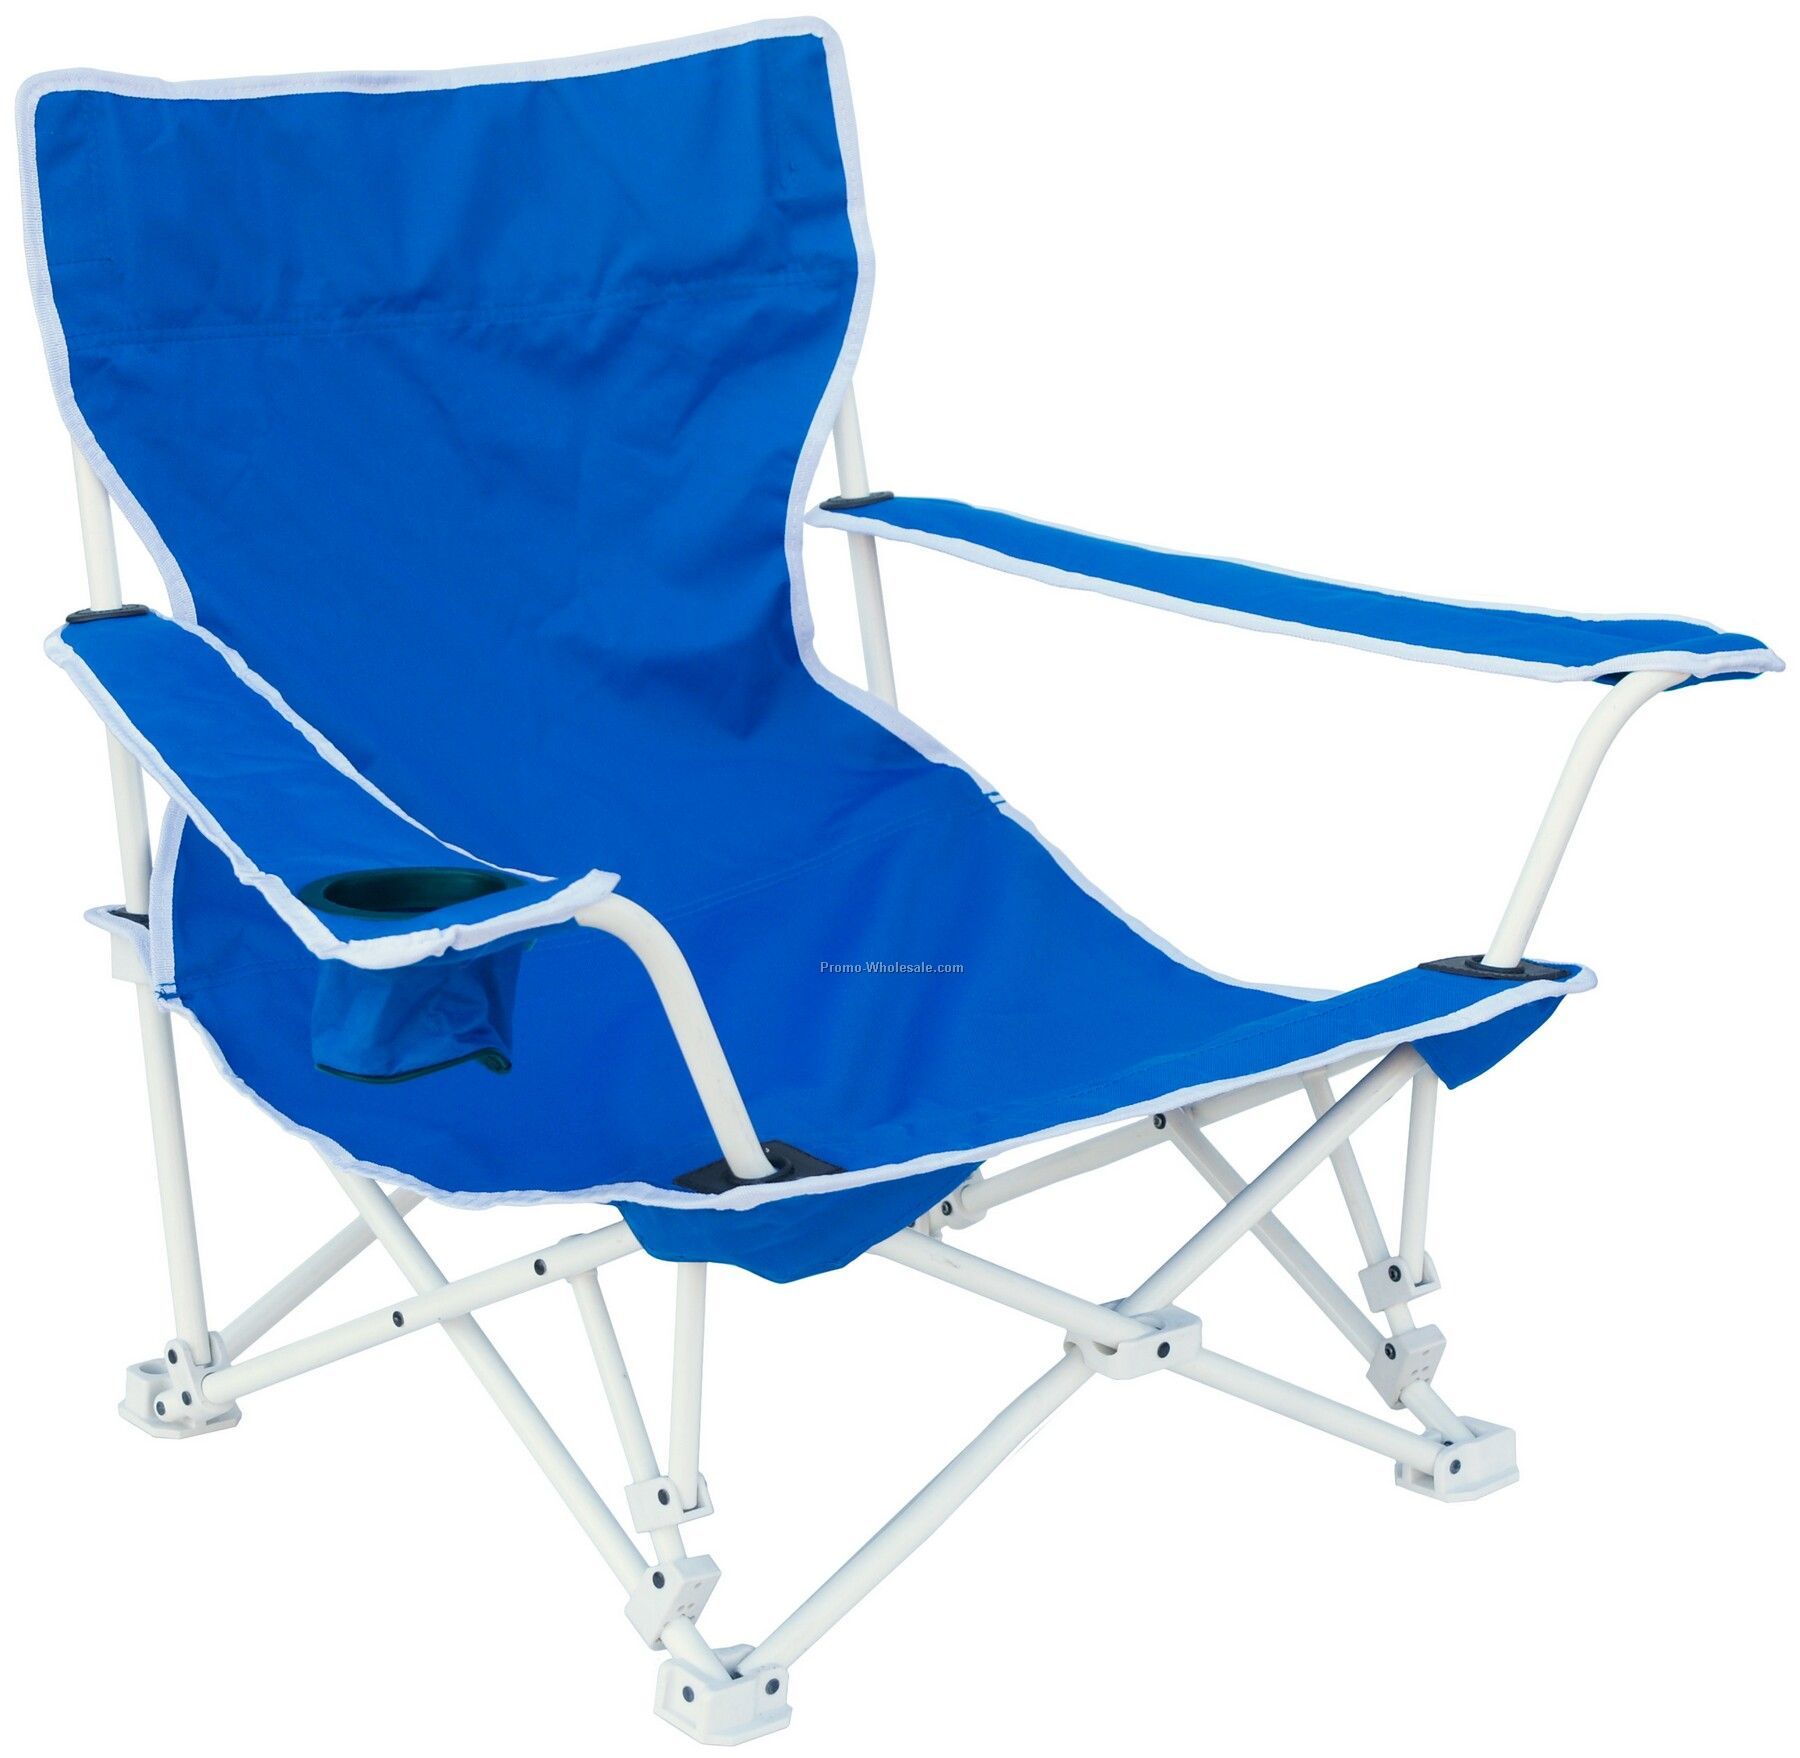 Deluxe Beach Chair W/ Arm Rest